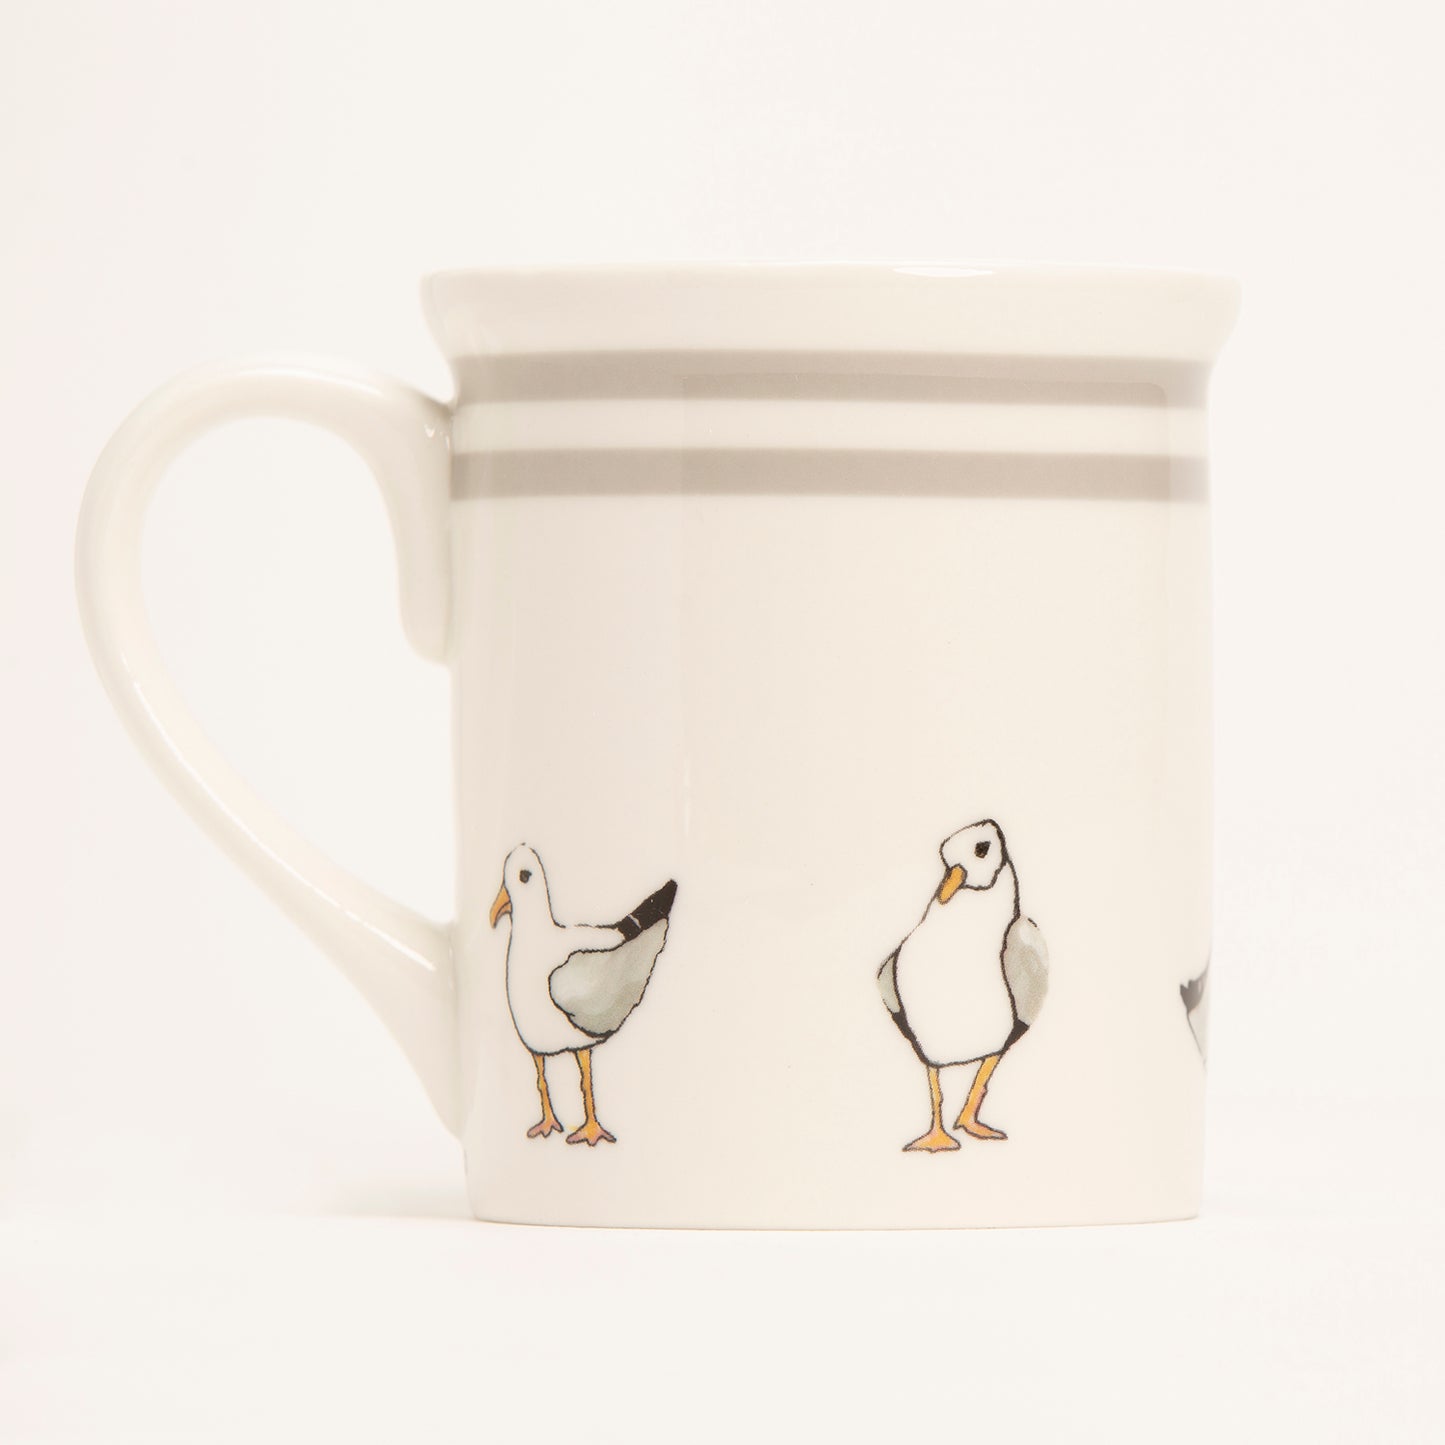 Seagulls Mug